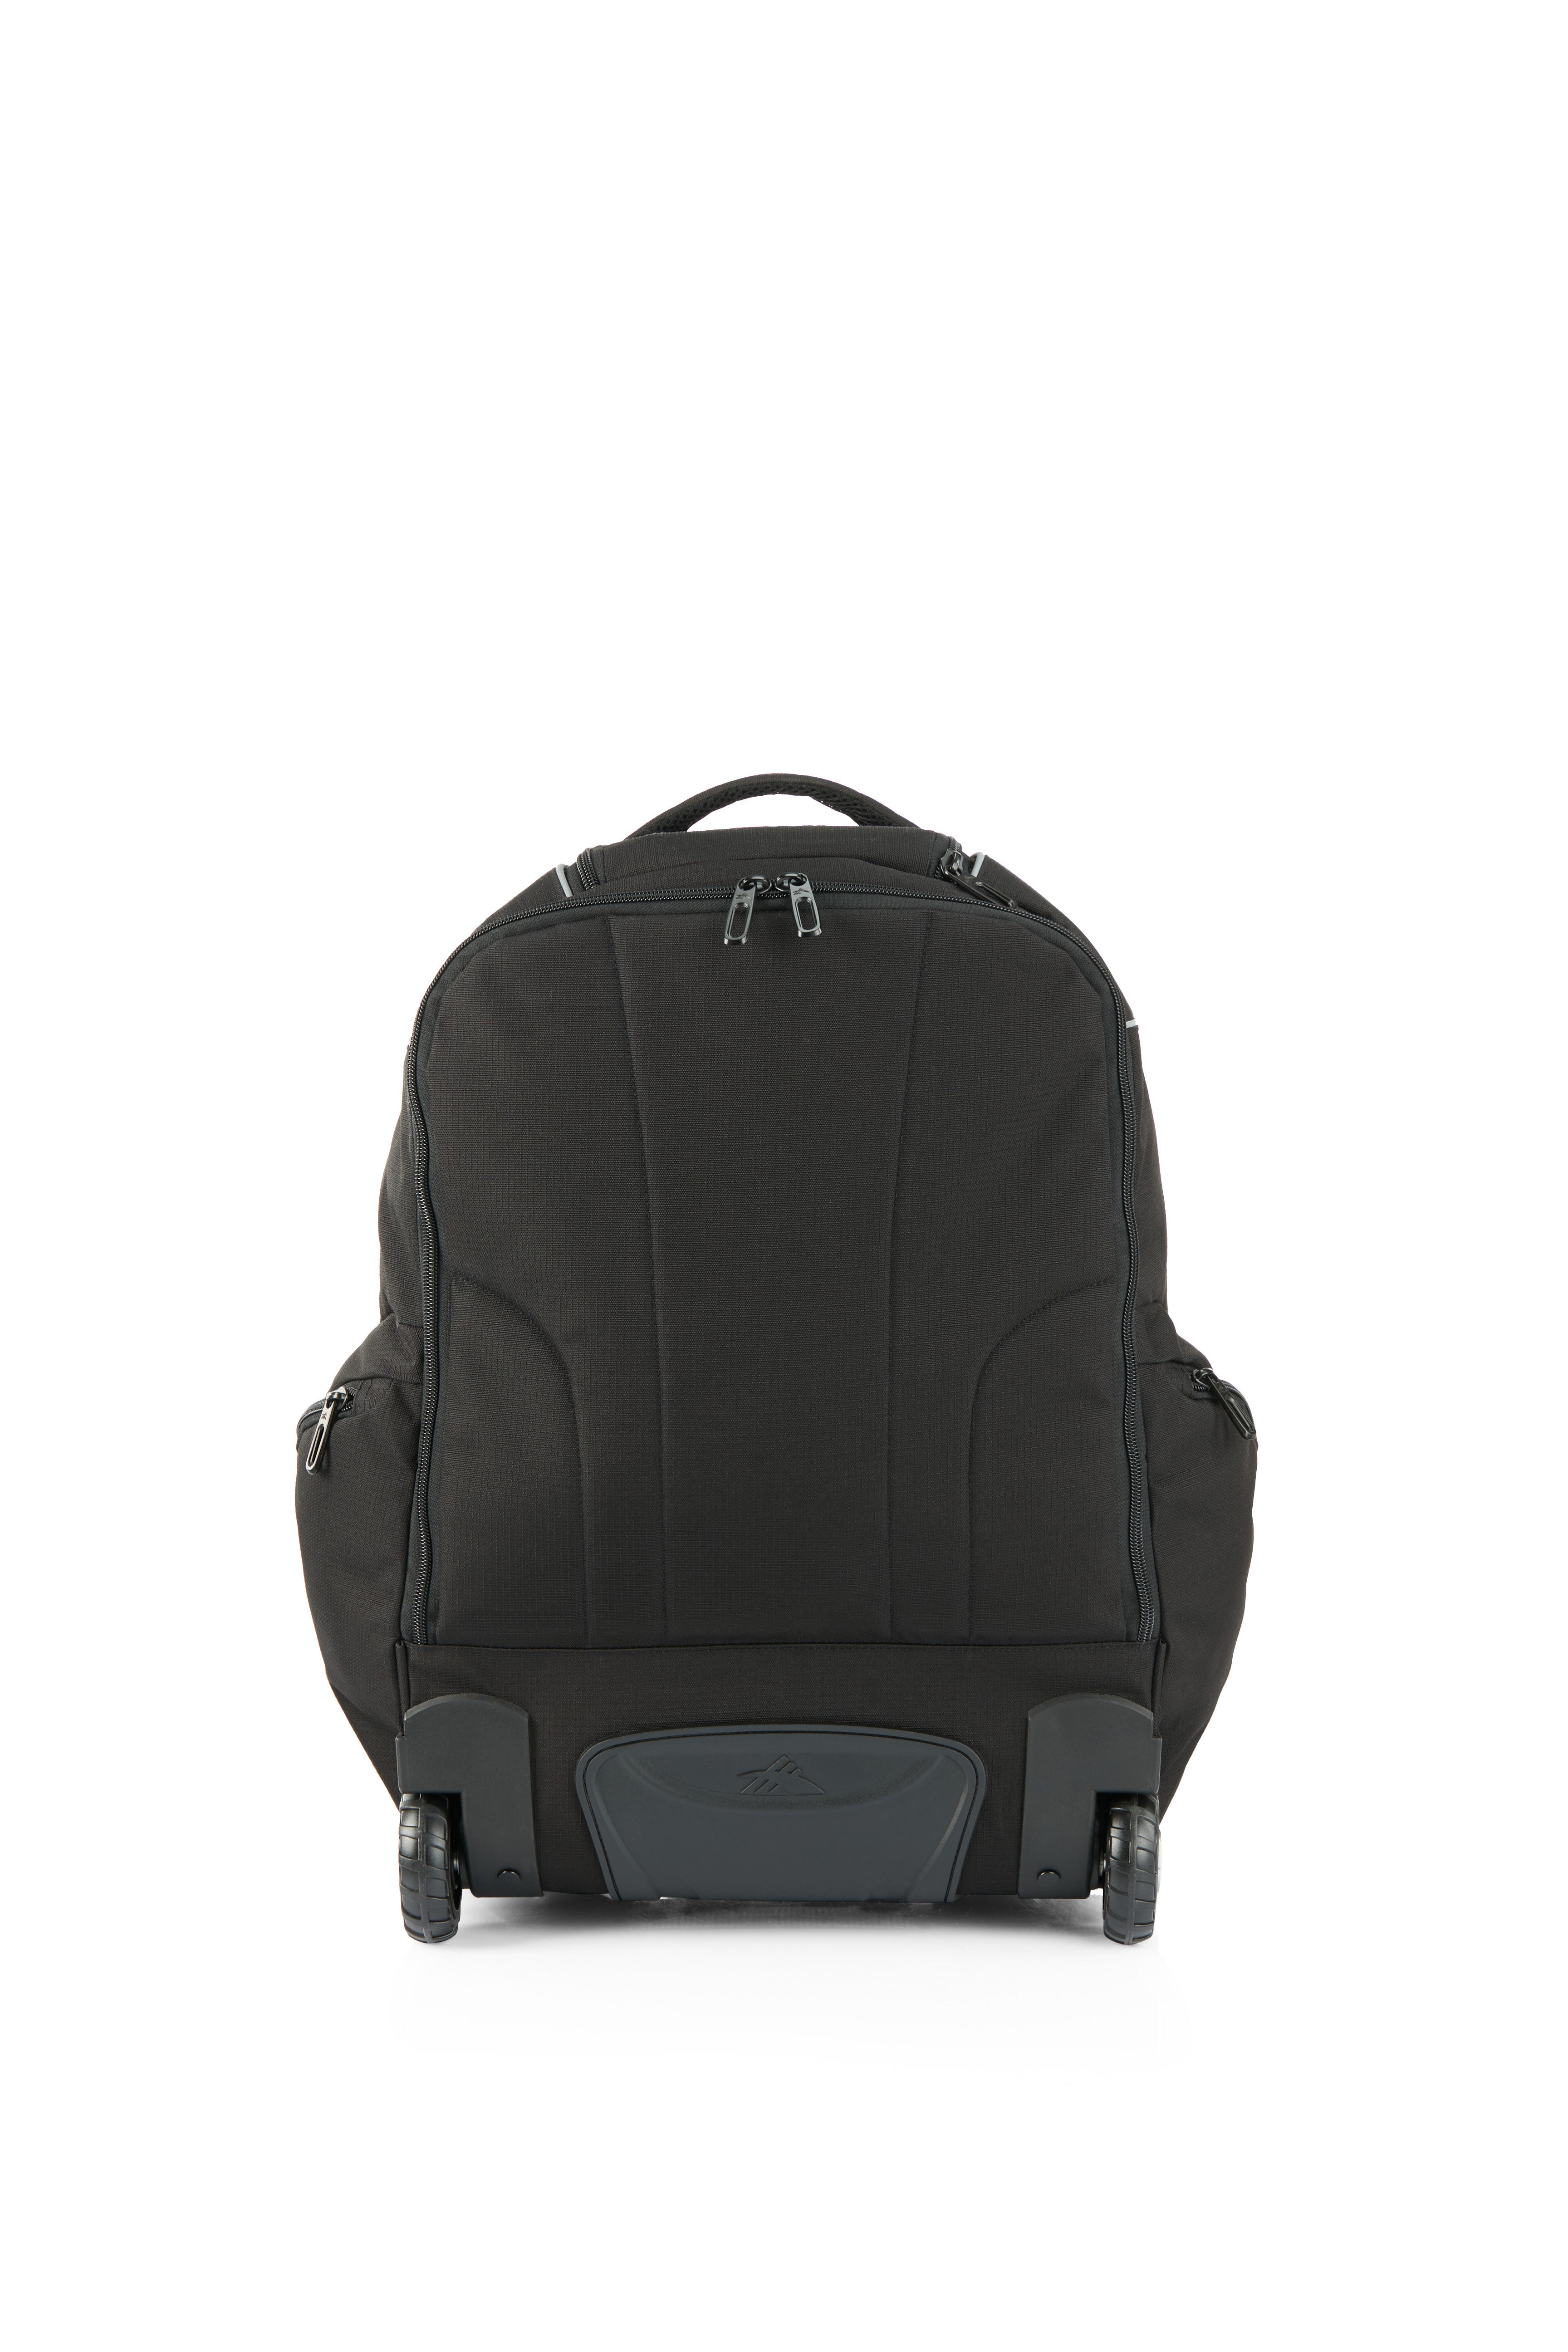 High Sierra - Access 3.0 Eco Pro Wheeled backpack - Black-5